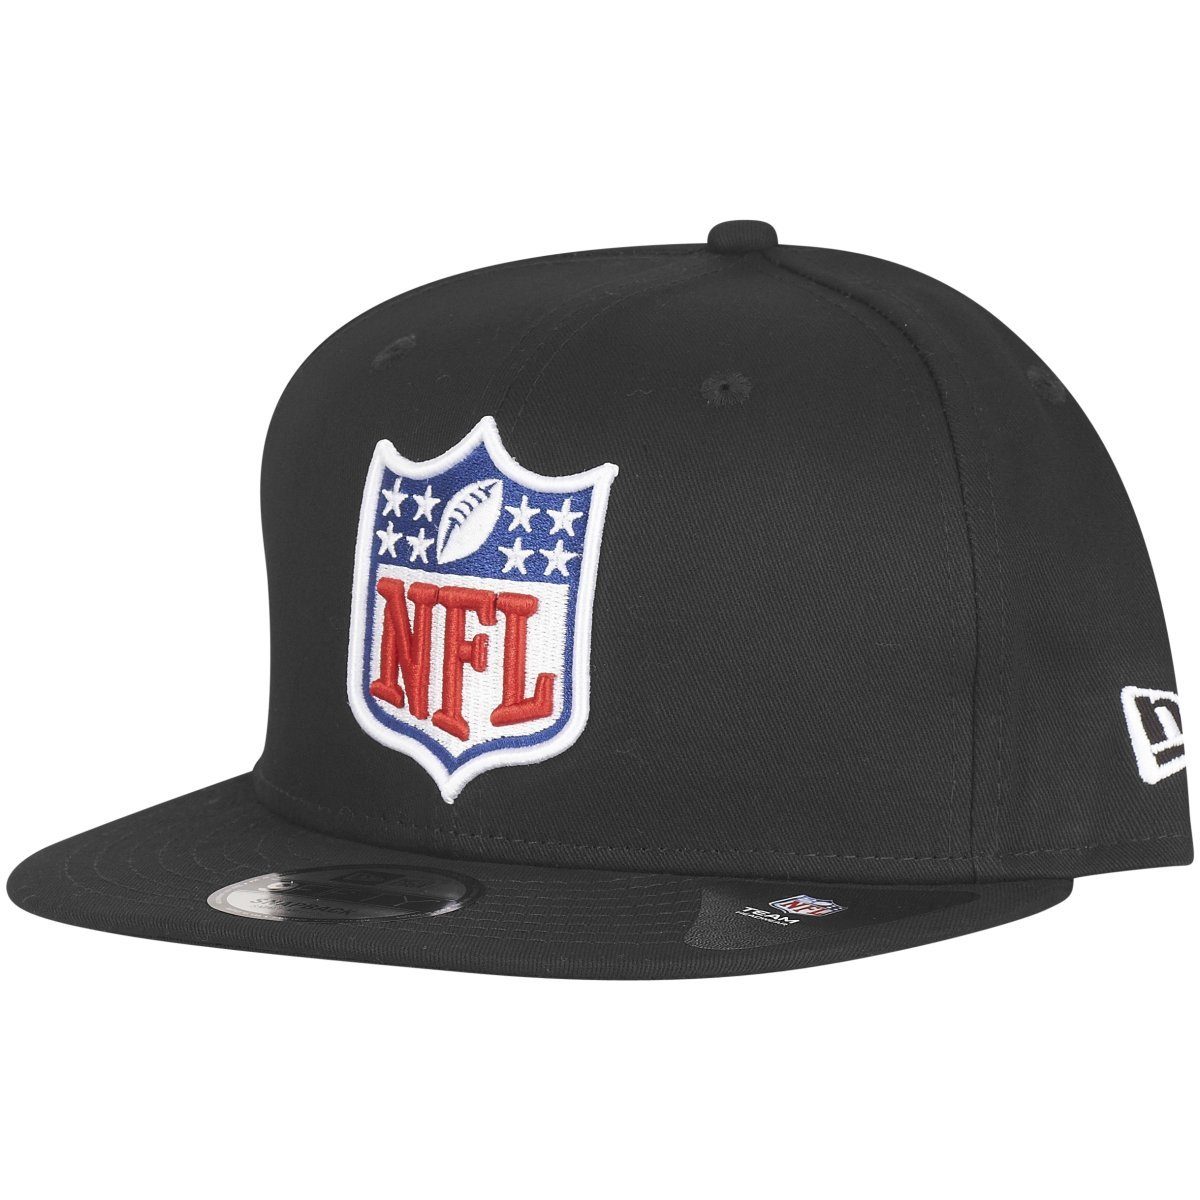 New Snapback NFL Shield Era 9Fifty Cap